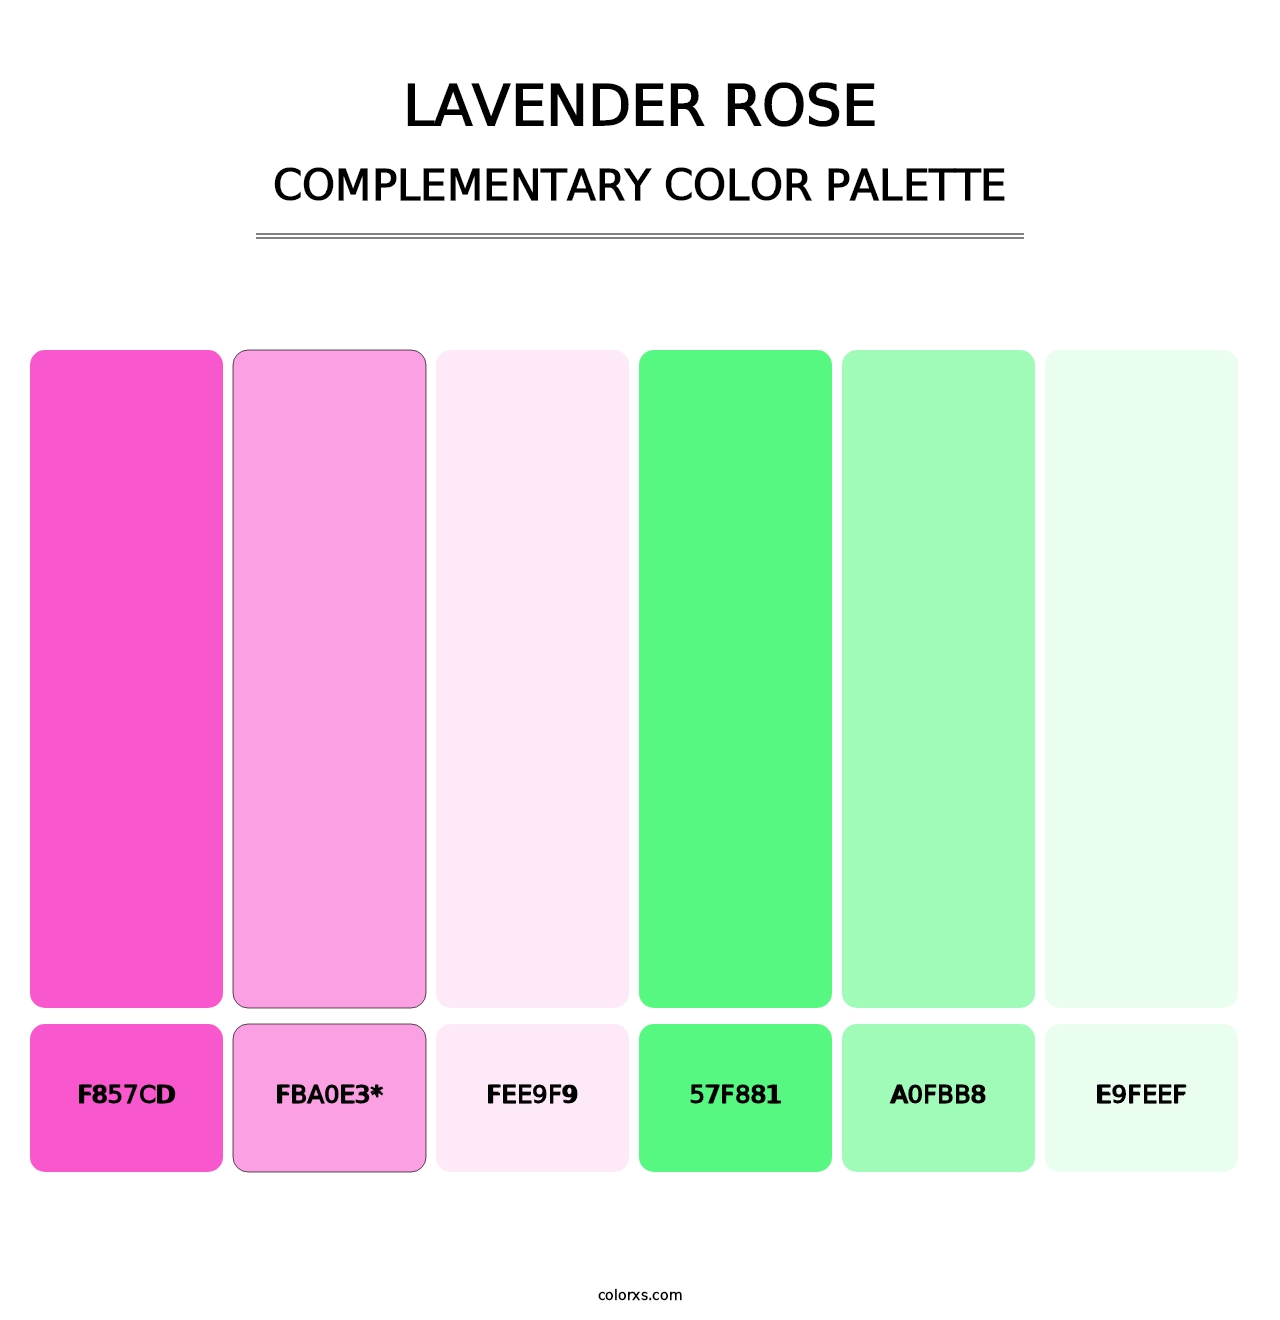 Lavender Rose - Complementary Color Palette